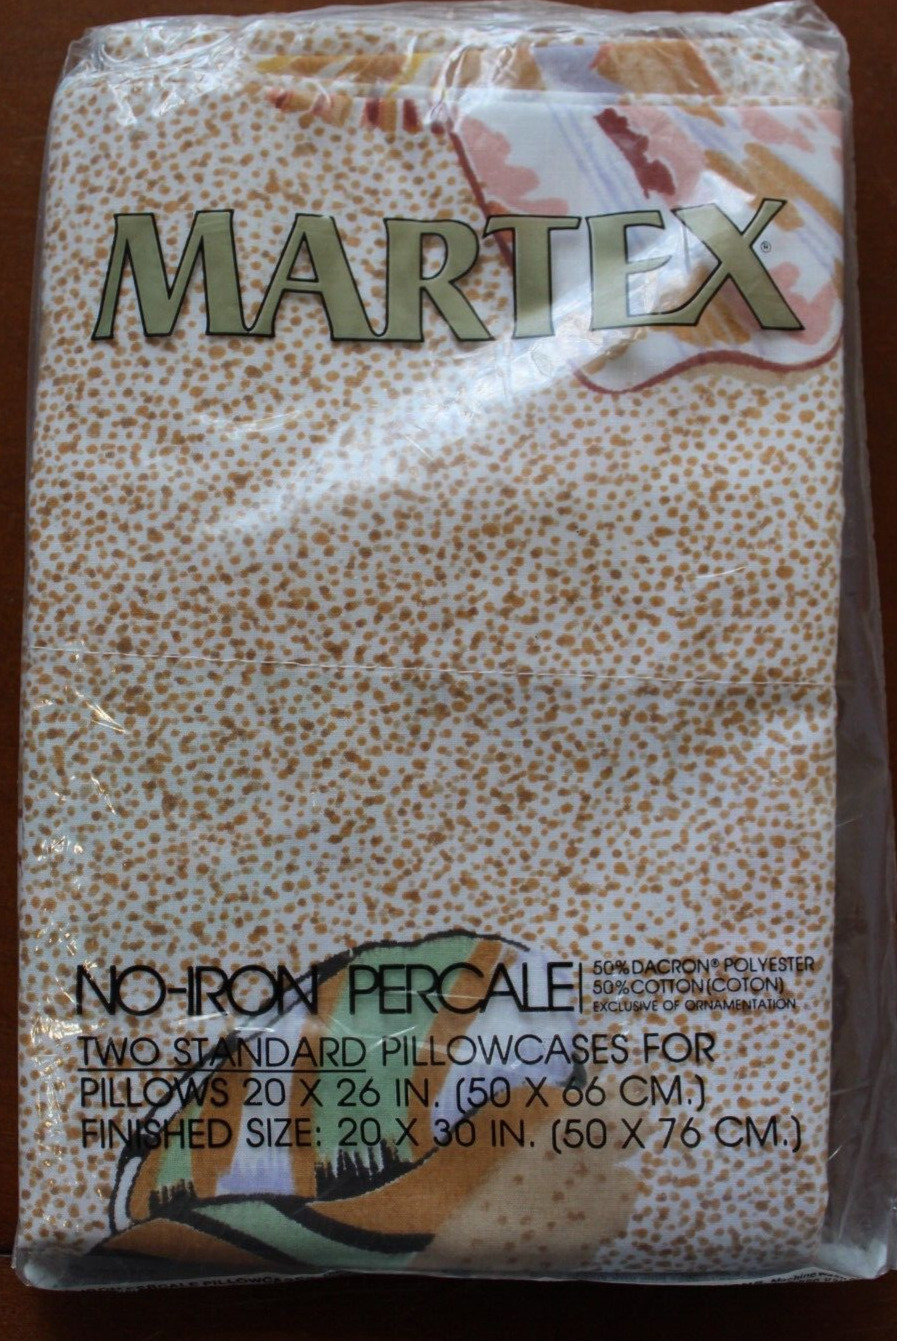 NIP 1970s Vintage Martex Percale Seaside 2 Standard Pillow Cases Dacron Cotton